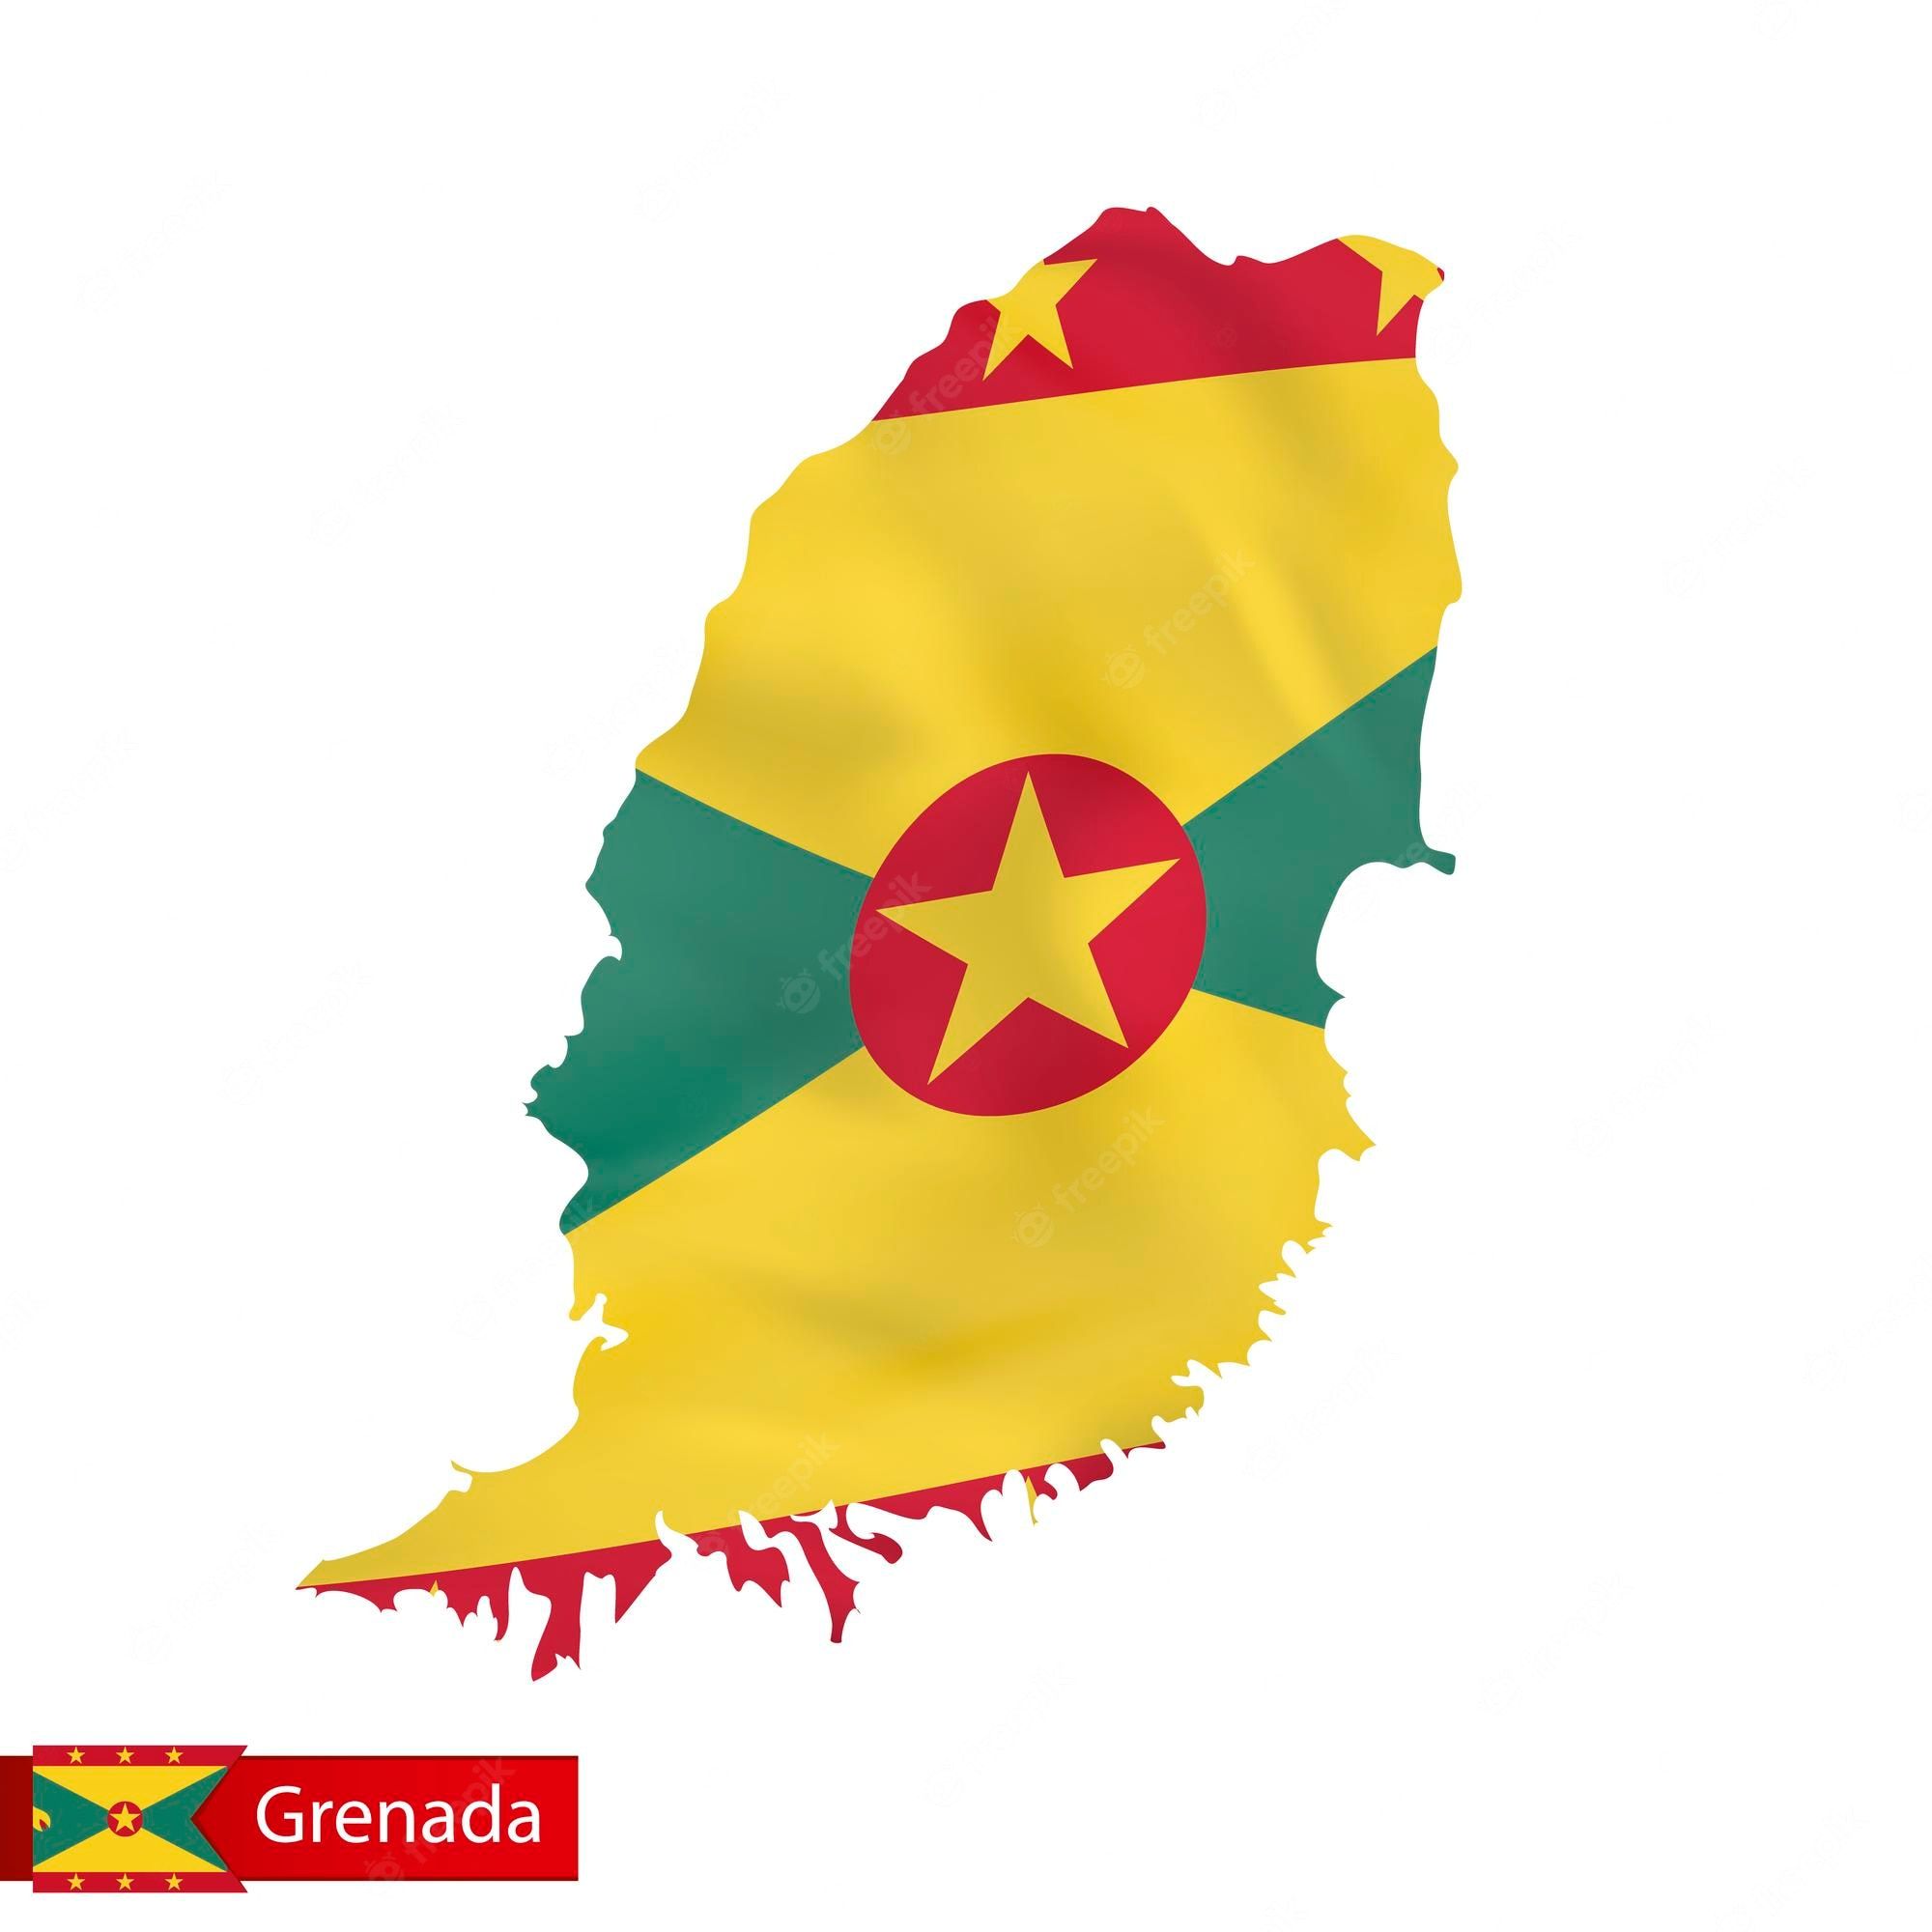 Grenada Flag Wallpapers - Top Free Grenada Flag Backgrounds ...